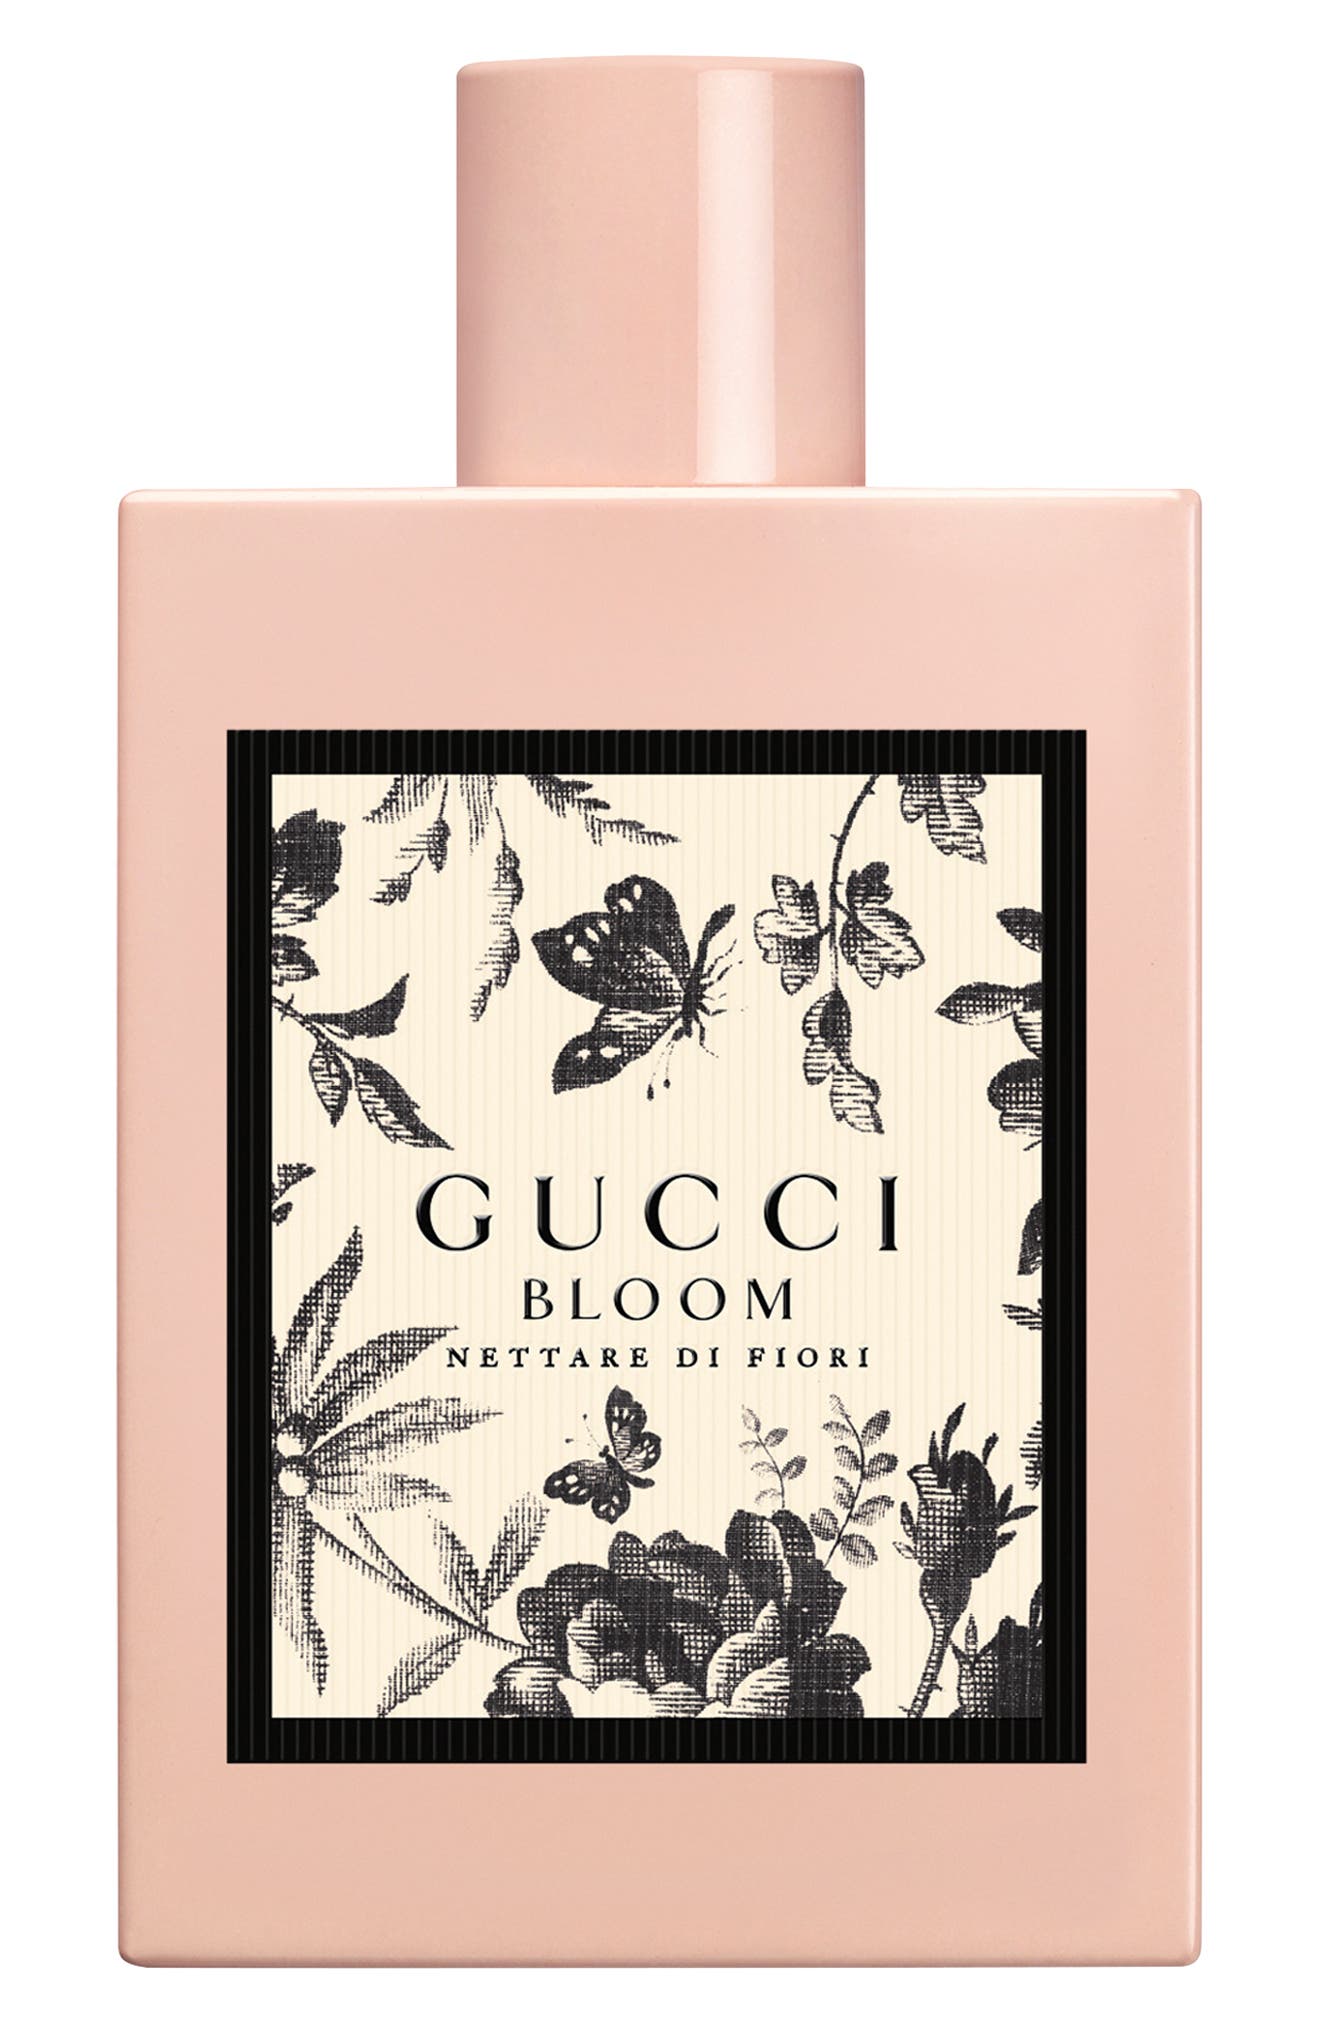 Gucci Bloom Nettare di Fiori Eau de Parfum Intense at Nordstrom, Size 1.7 Oz